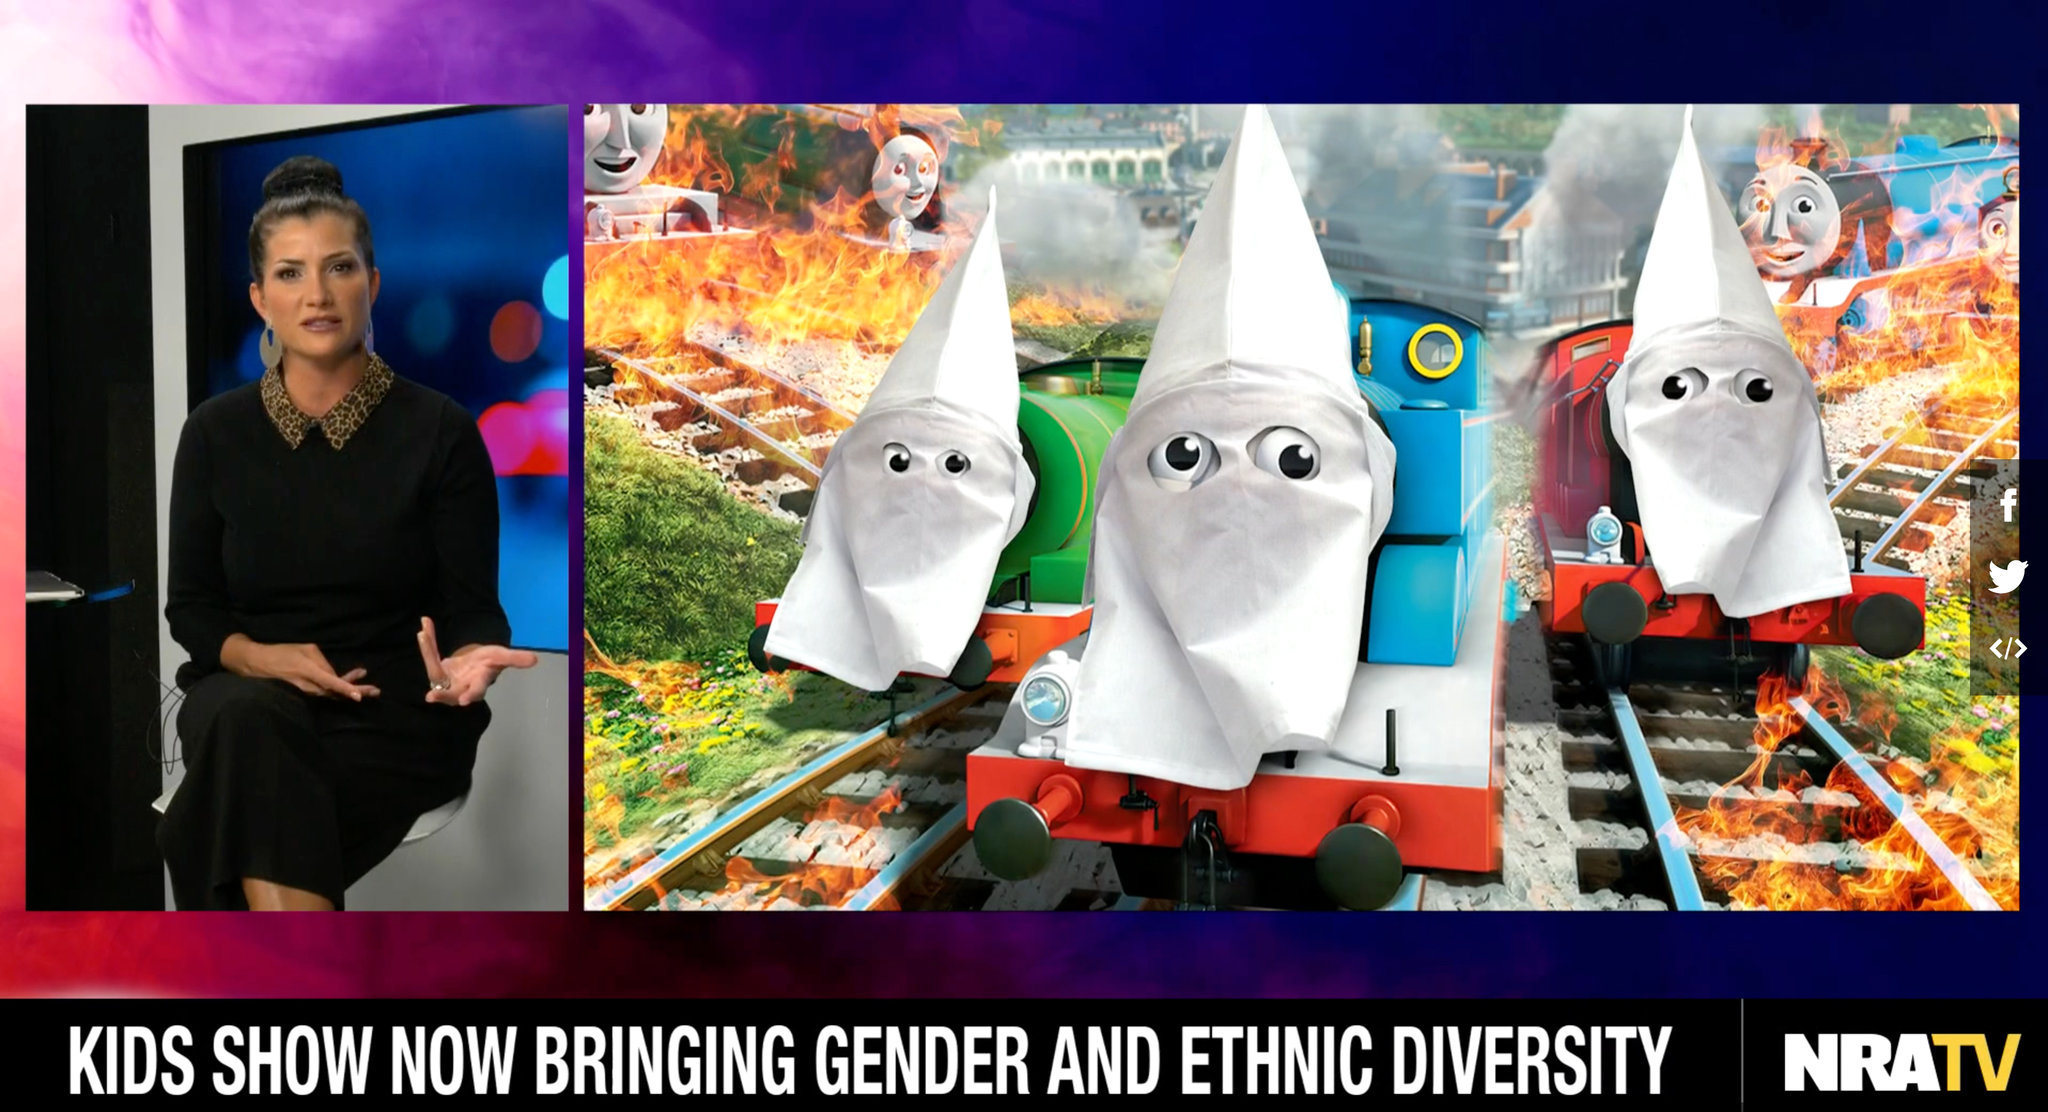 Dana Loesch, an N.R.A. spokeswoman, mocks ethnic diversity on the children’s program ‘Thomas & Friends,’ portraying the show’s talking trains in Ku Klux Klan hoods., February 2019.